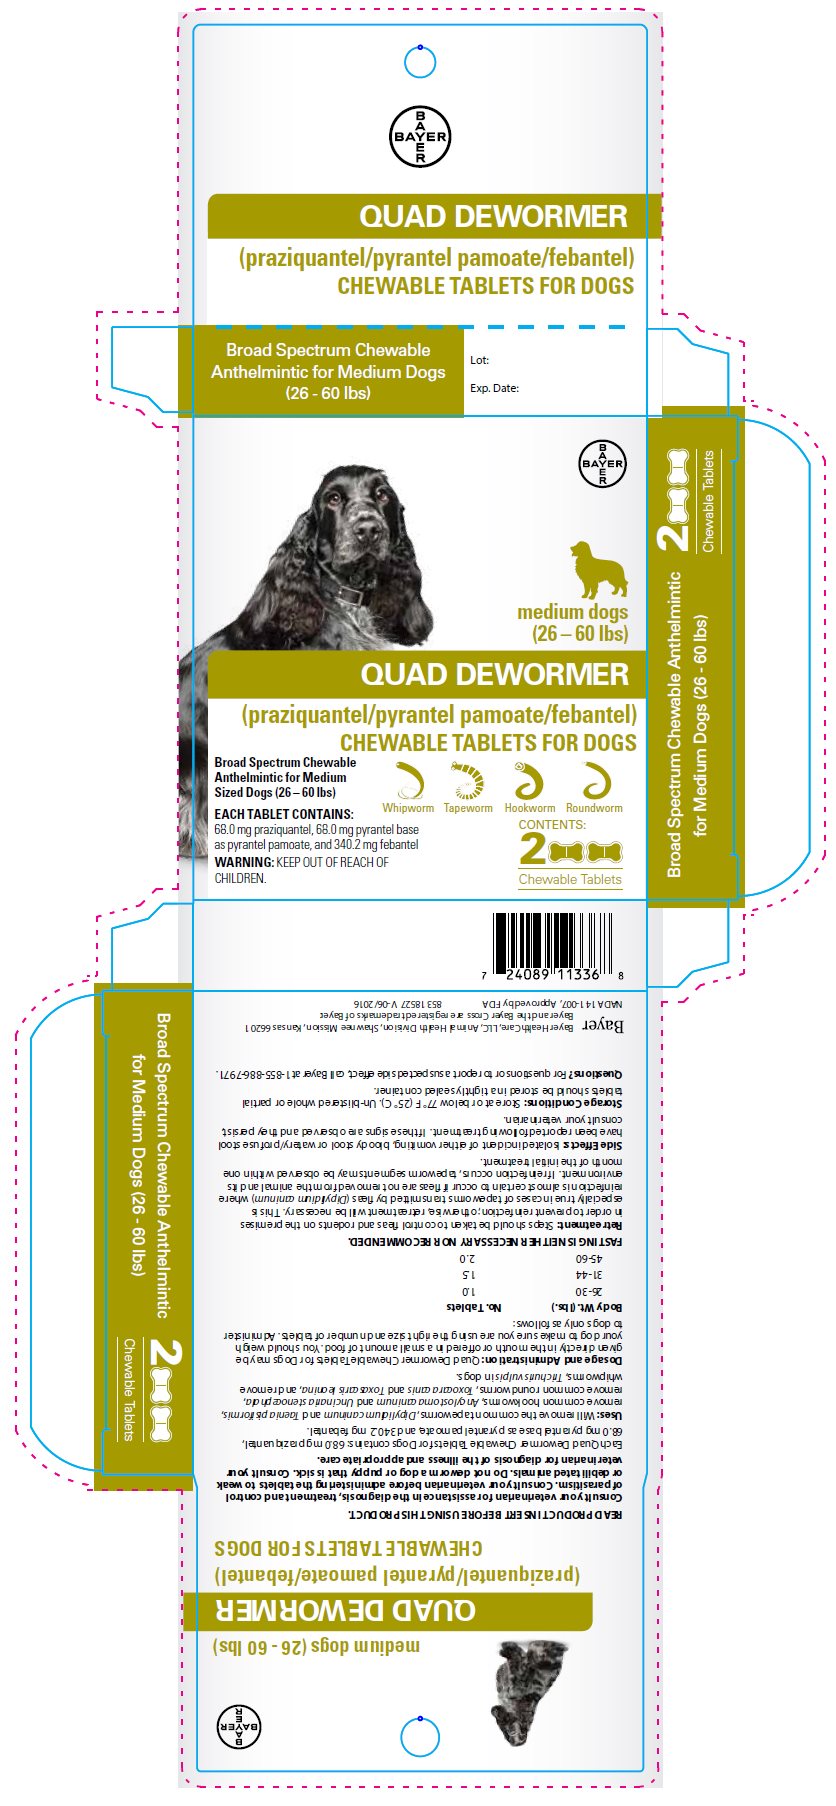 Quad Dewormer (praziquantel/pyrantel pamoate/febantel) Chewable Tablets for Dogs label - medium dogs (26-60 lbs)